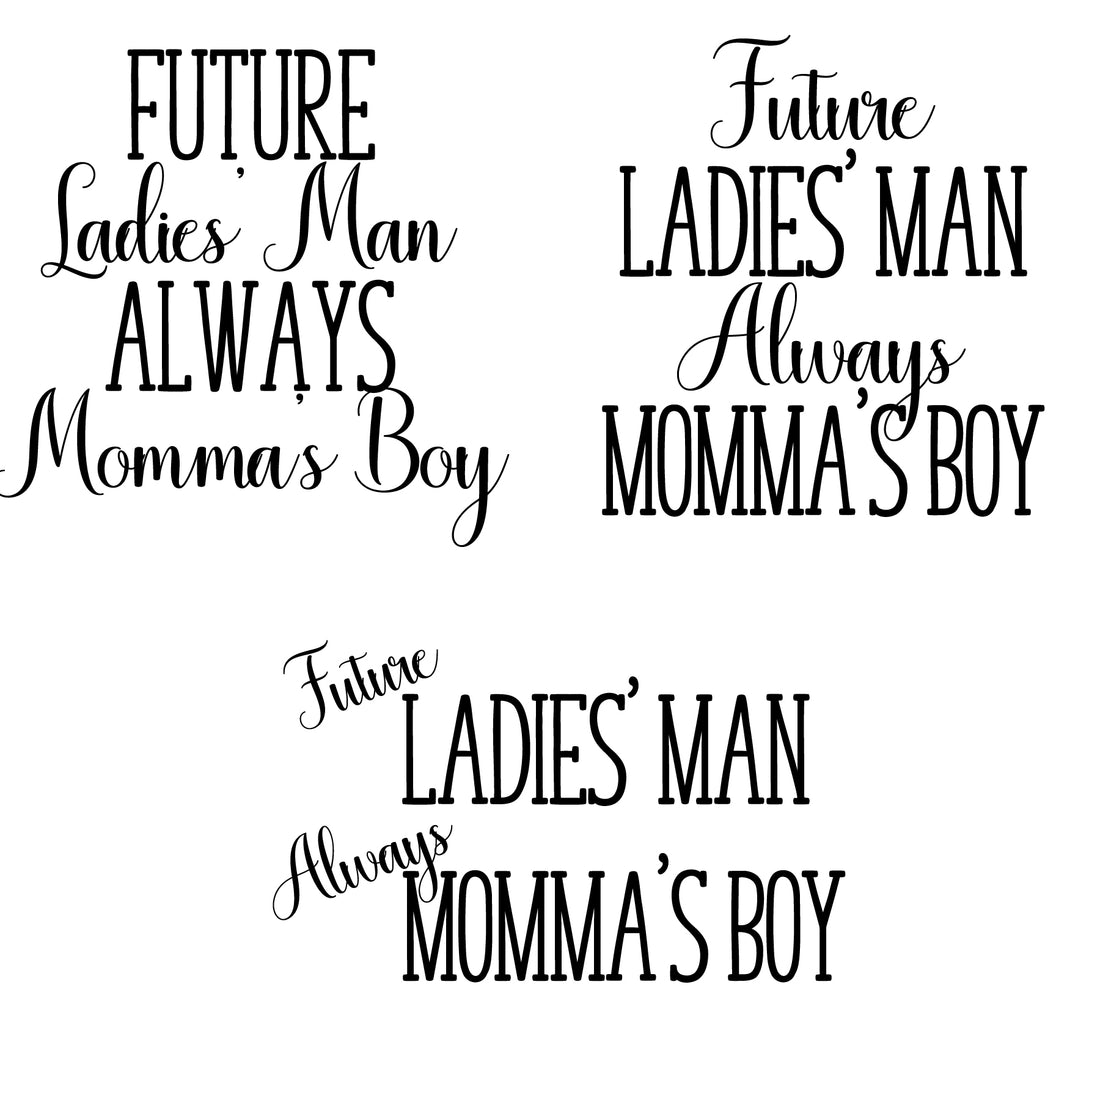 Future Ladies Man Always Mommas Boy 2